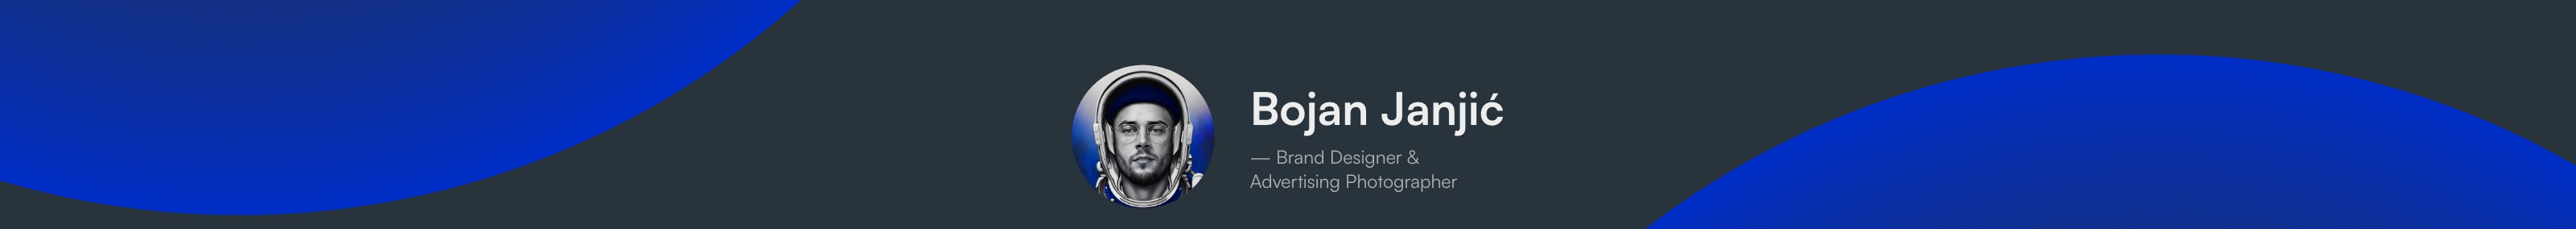 Bojan Janjic's profile banner